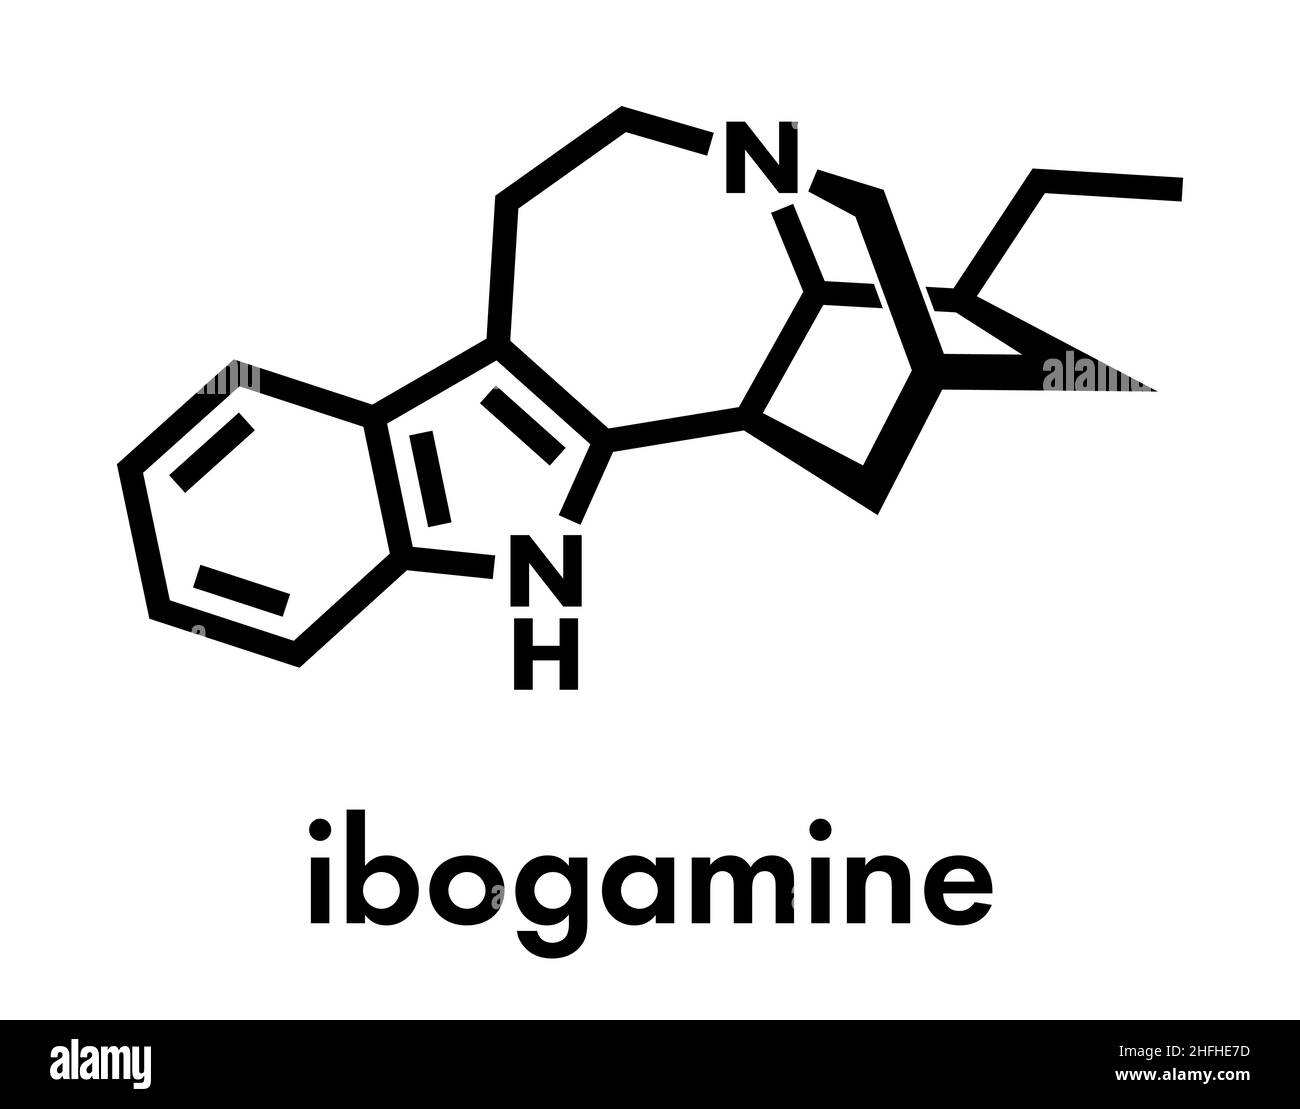 Ibogamine alkaloid molecule, found in Tabernanthe iboga. Skeletal formula. Stock Vector